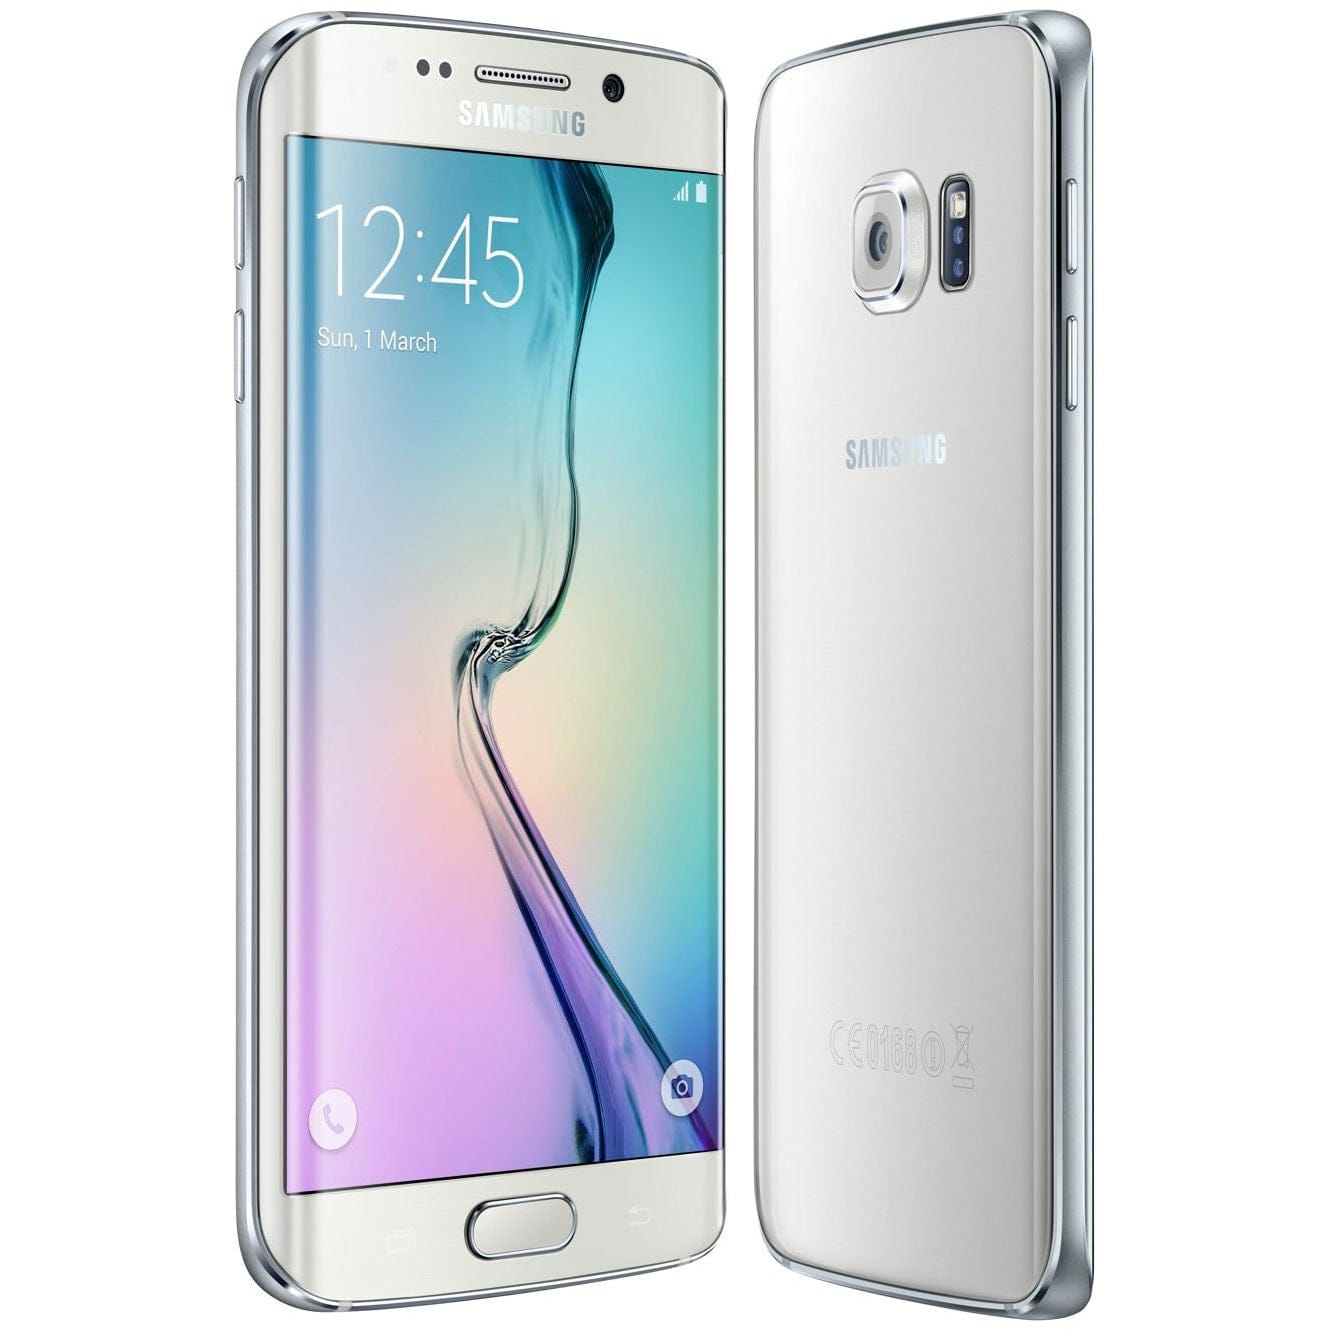 Samsung Galaxy S6 edge G925F - 64 GB - White - Unlocked - GSM